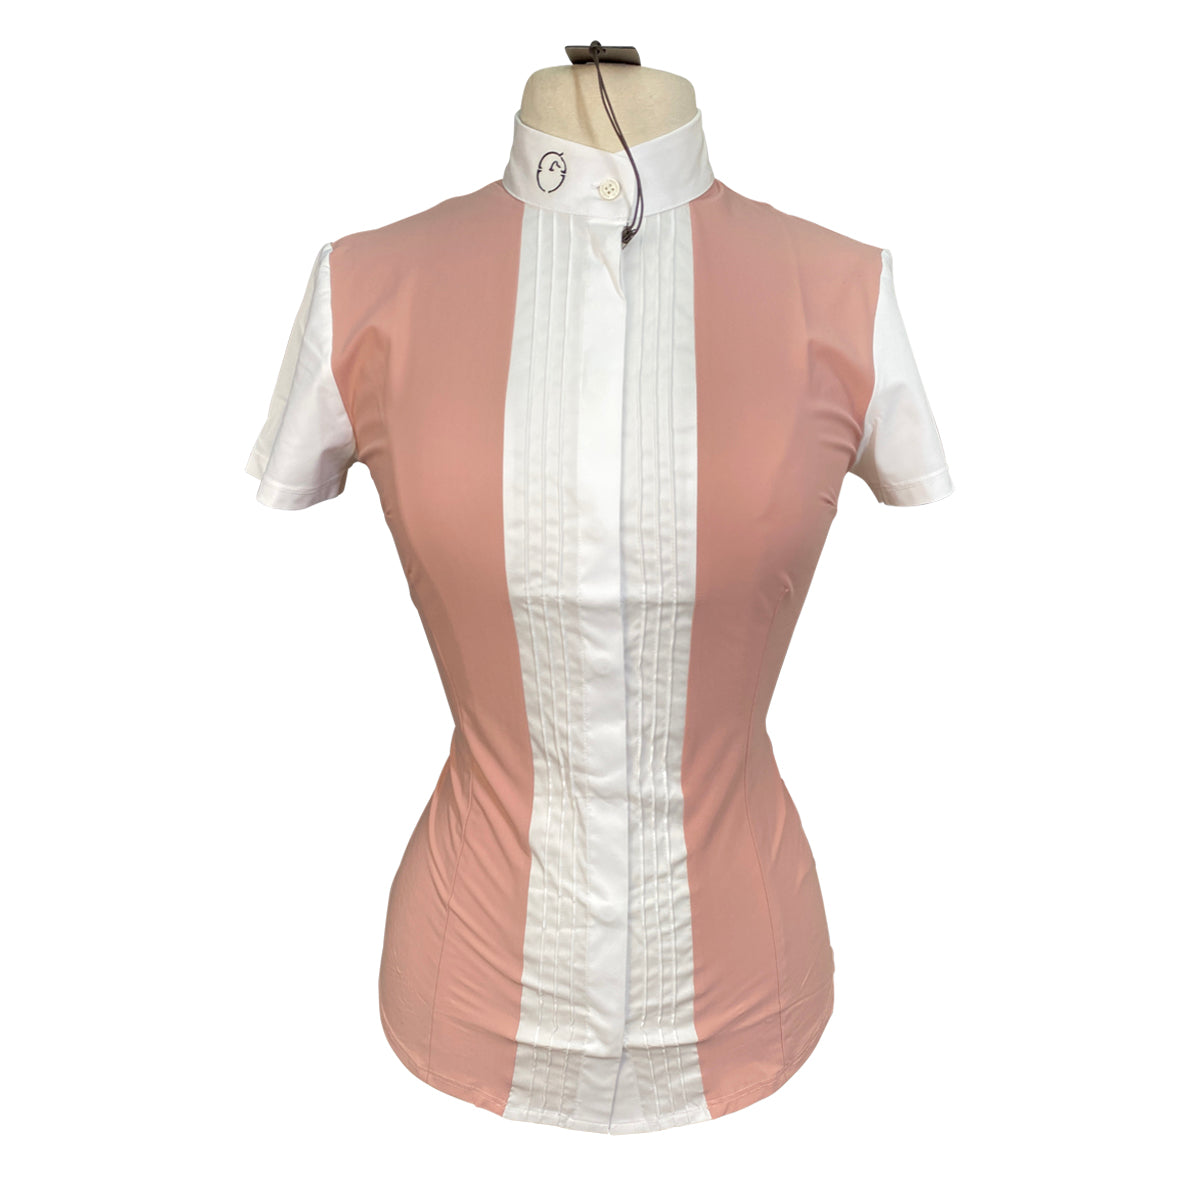 Vestrum Medan Short Sleeve Show Shirt in Pink/White